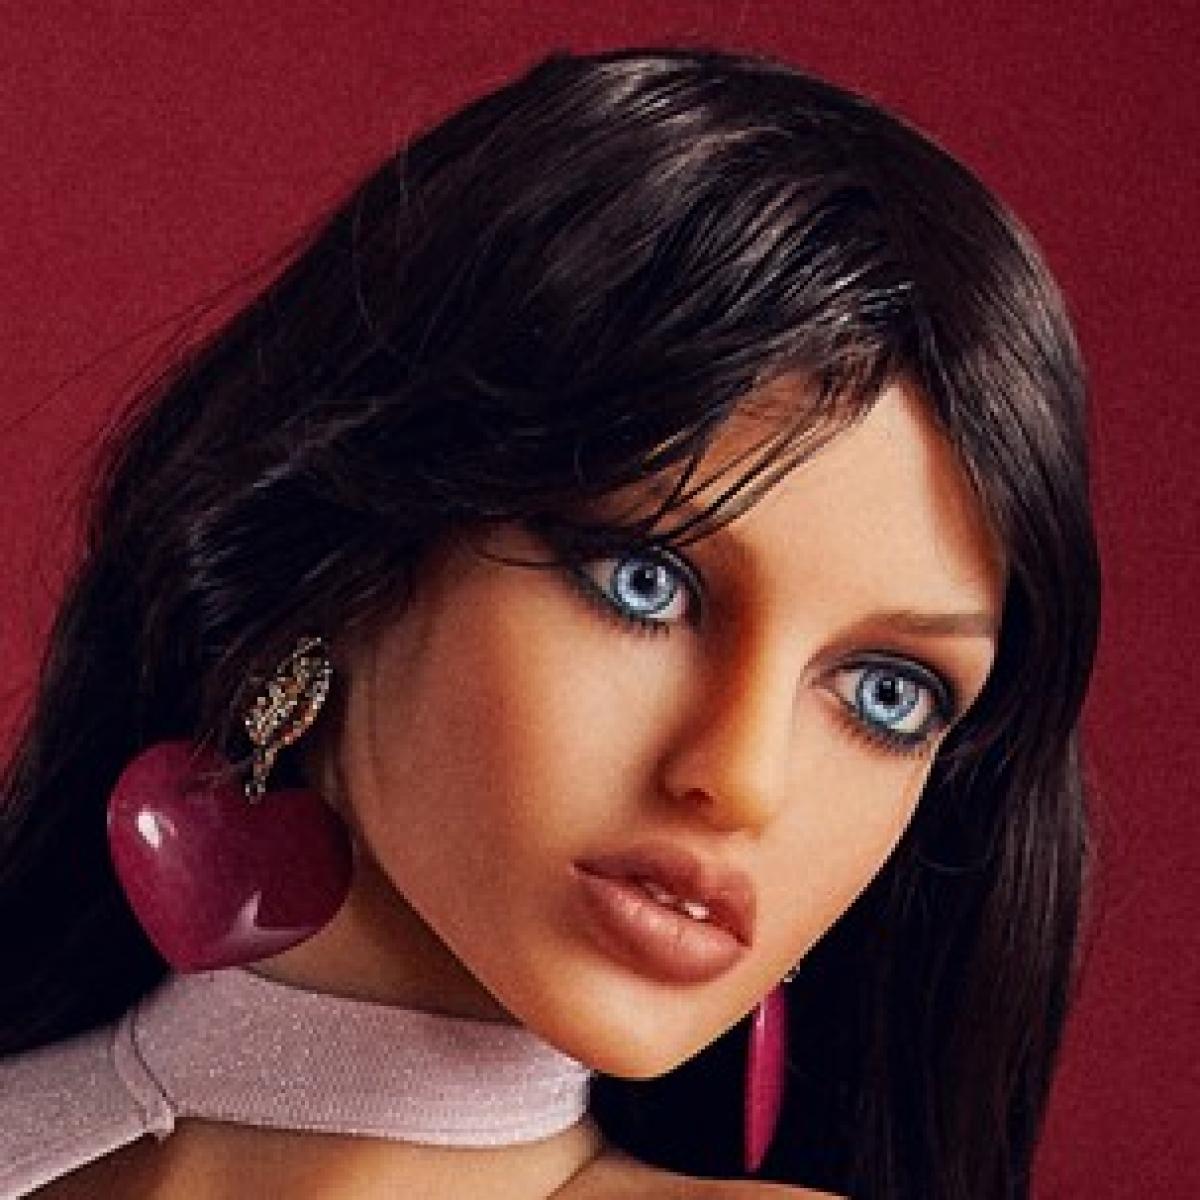 Neodoll Racy - Anya Head - Sex Doll Head - M16 Compatible - Tan